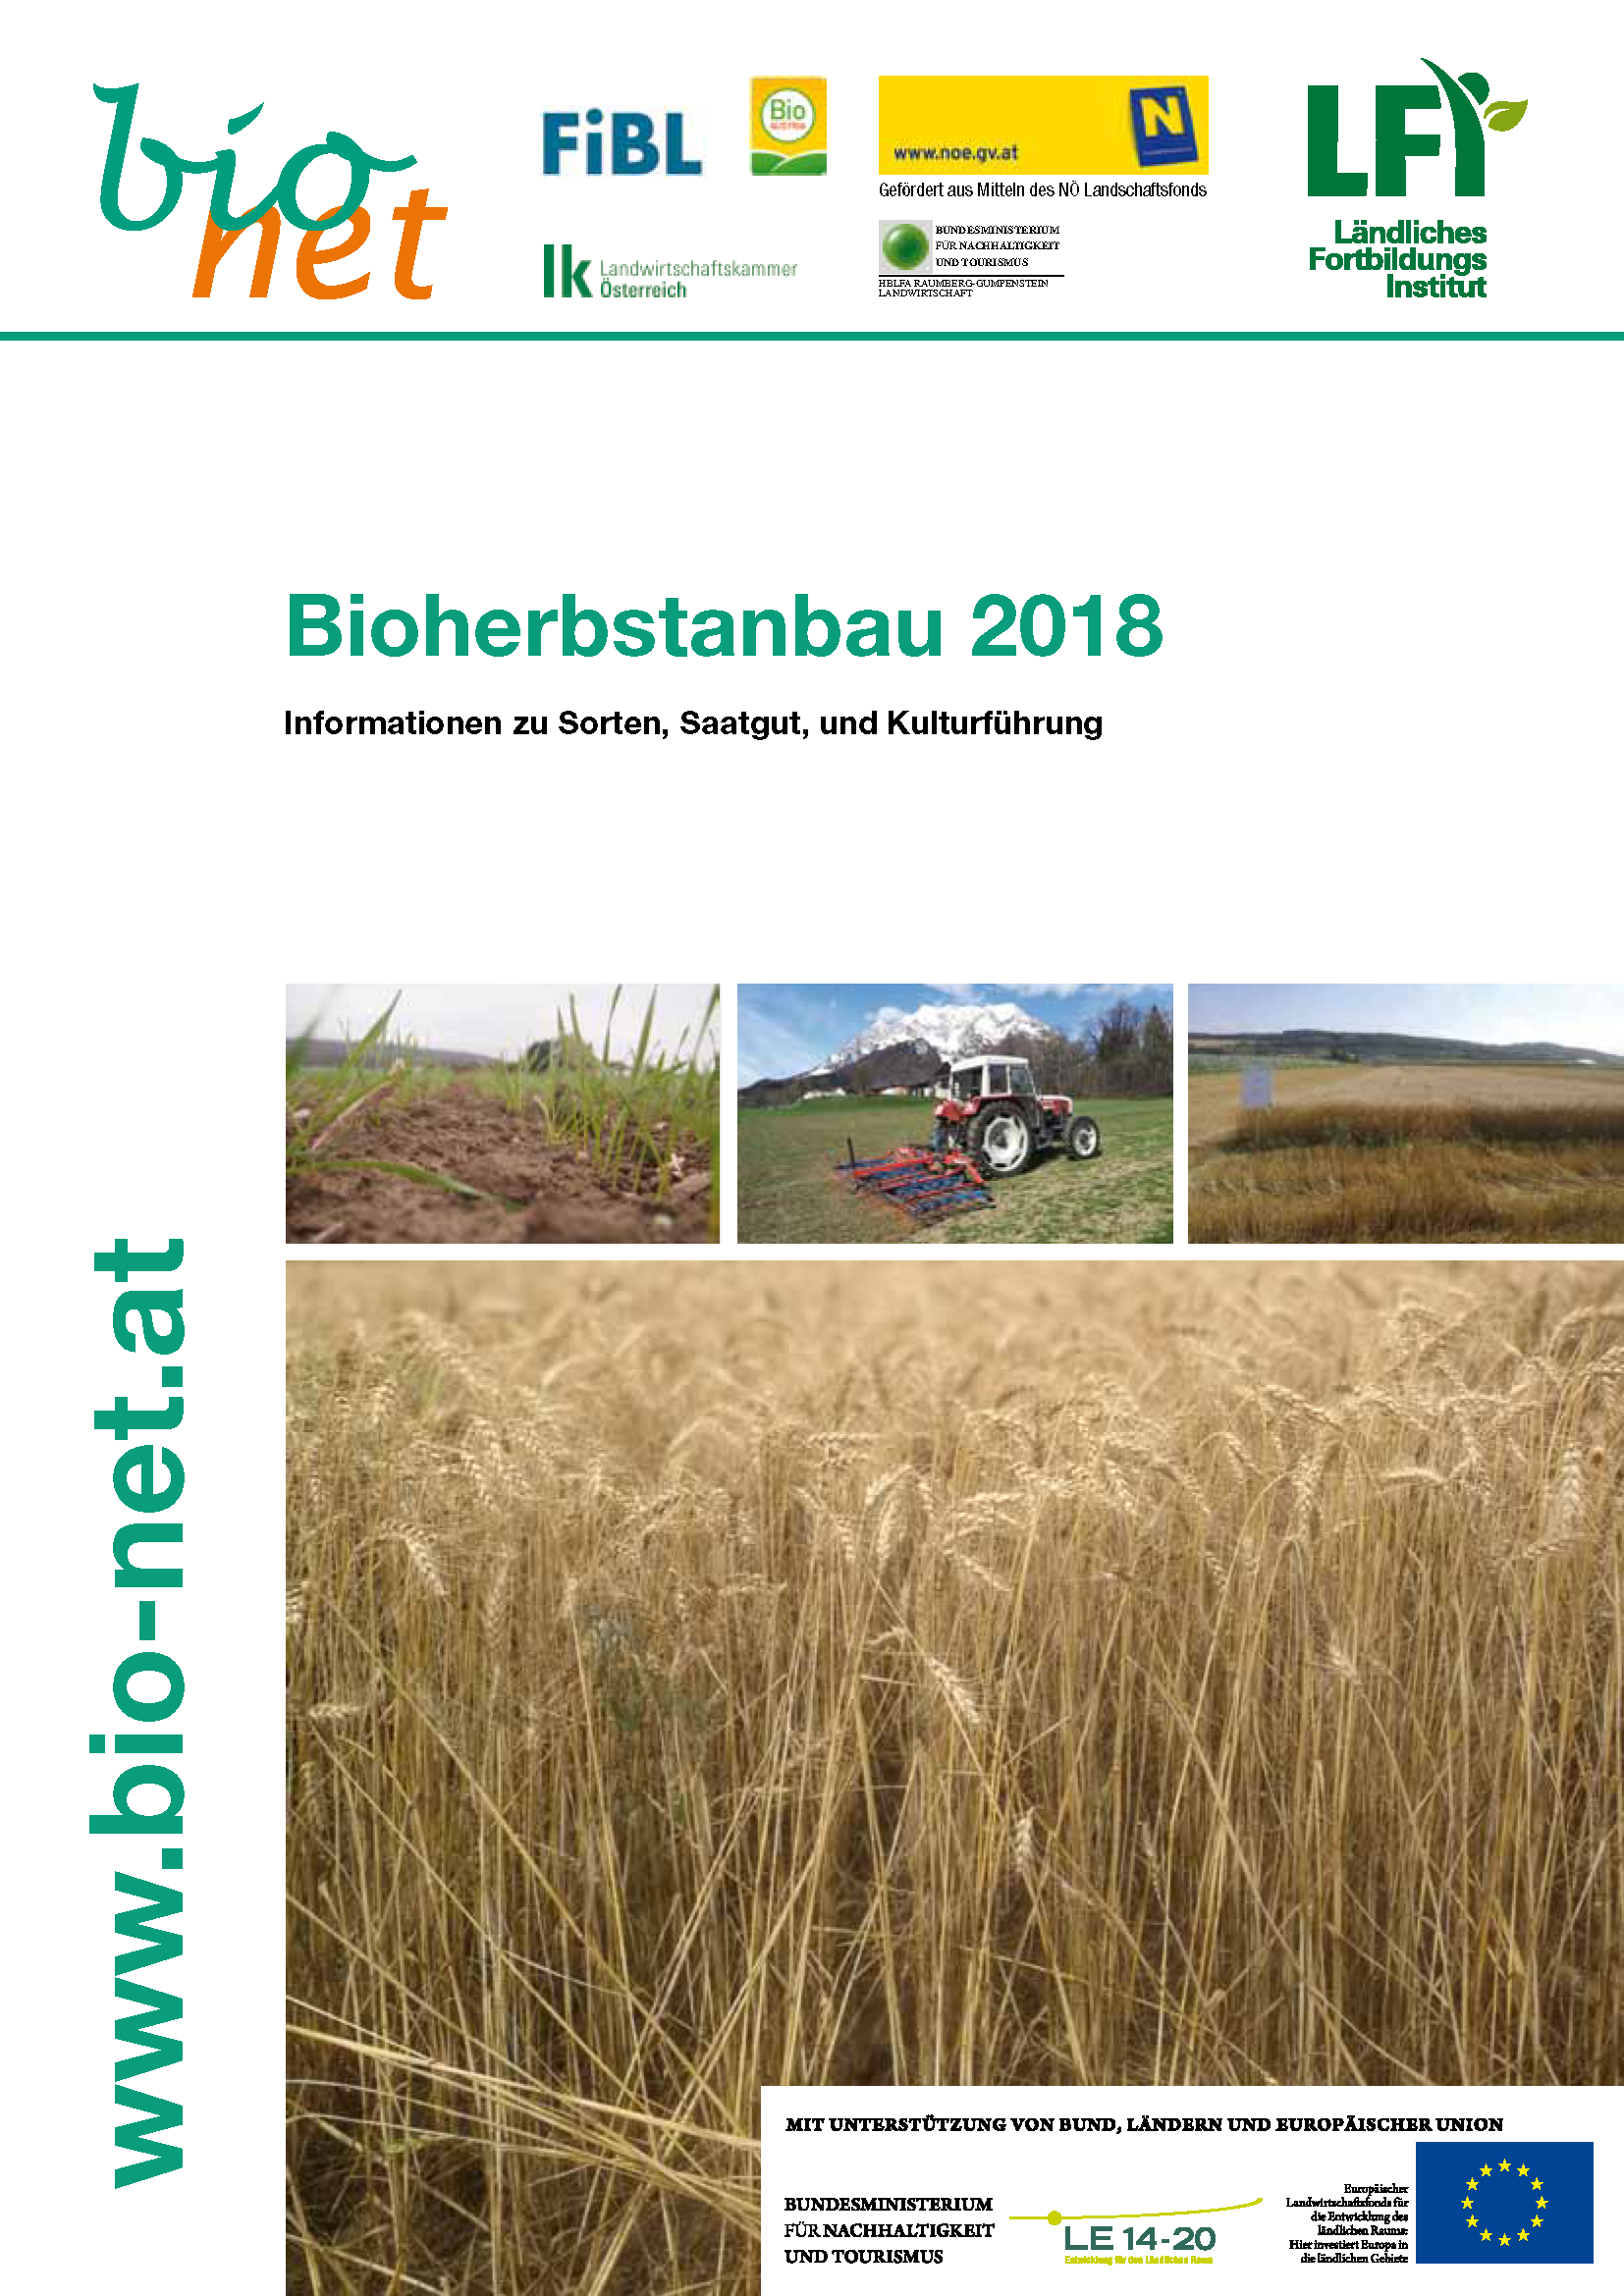 Bioherbstanbau 2018